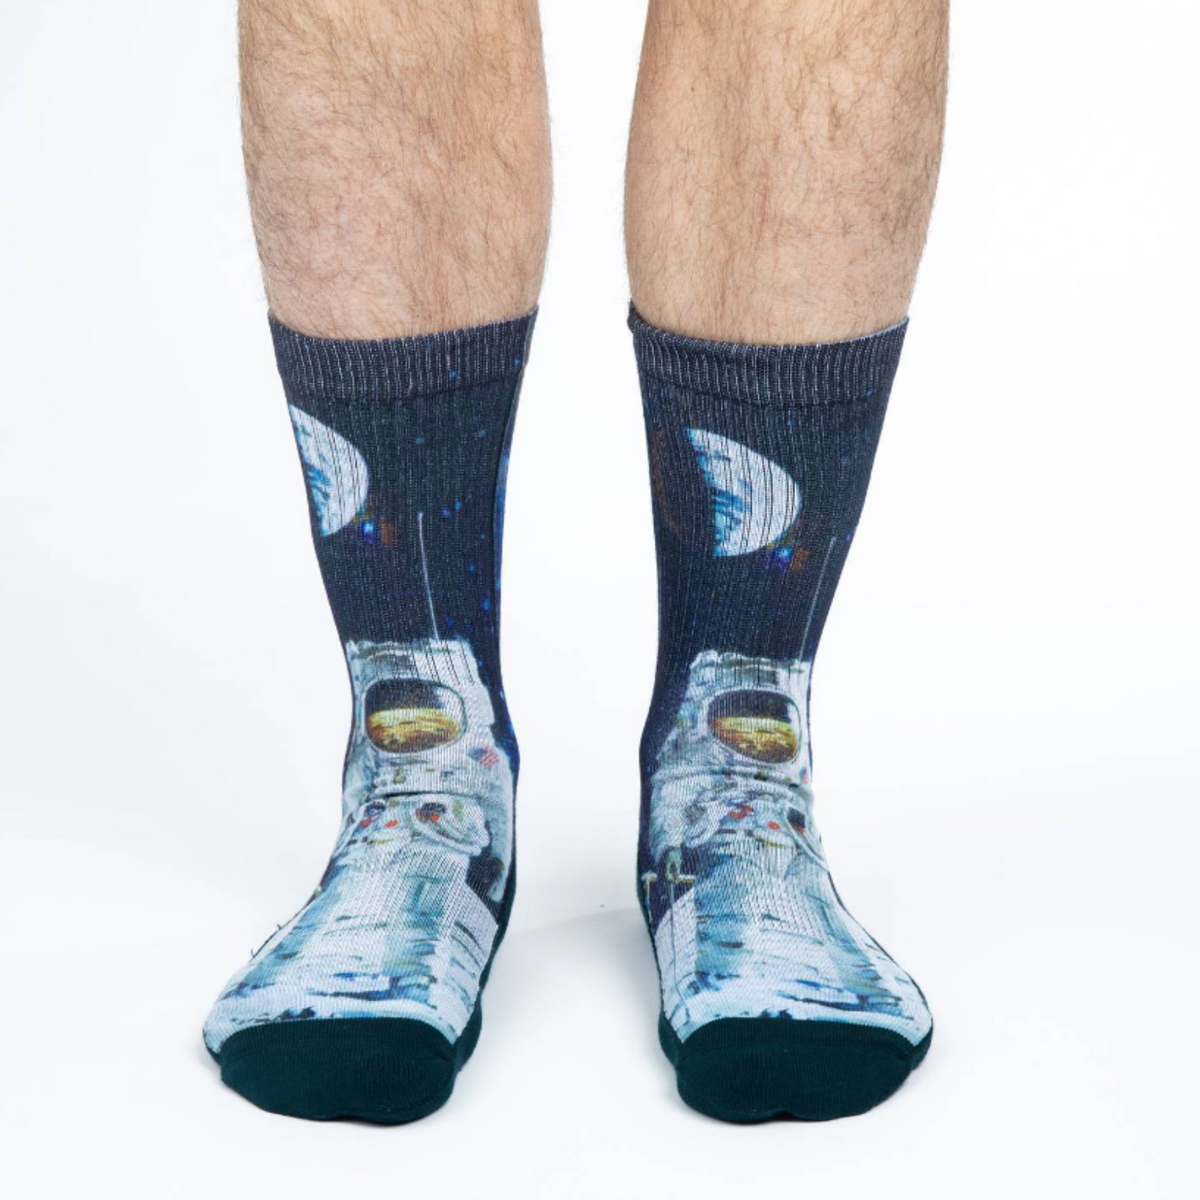 Good Luck Sock Apollo Astronaut men&#39;s crew sock featuring black sock with image of Apollo astronaut on the moon. Socks shown on model&#39;s feet. 